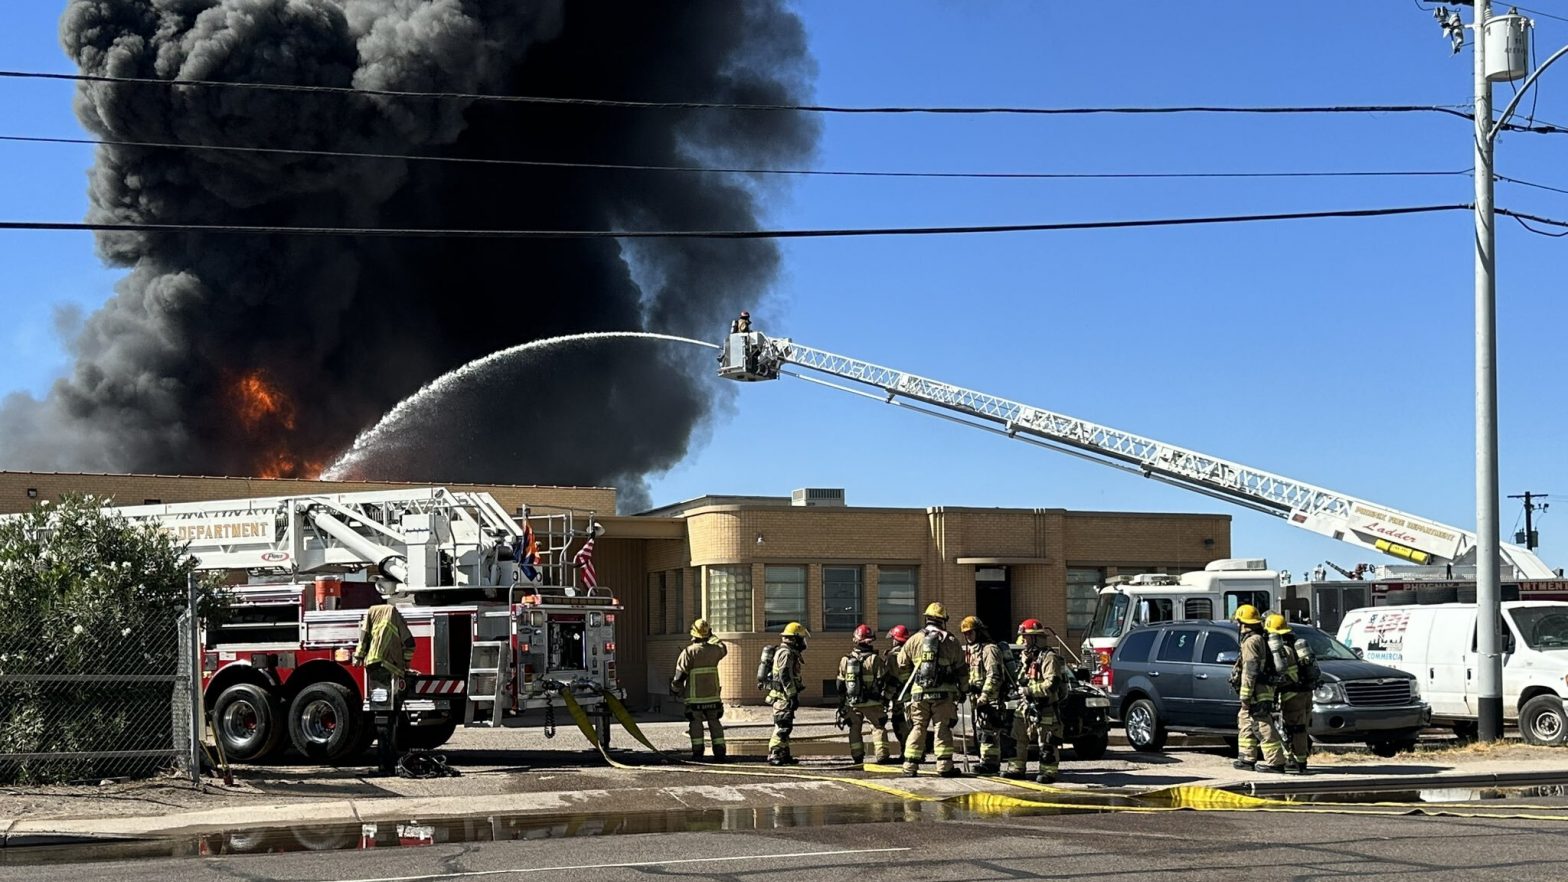 Massive fire breaks out at building in Phoenix | Watch video